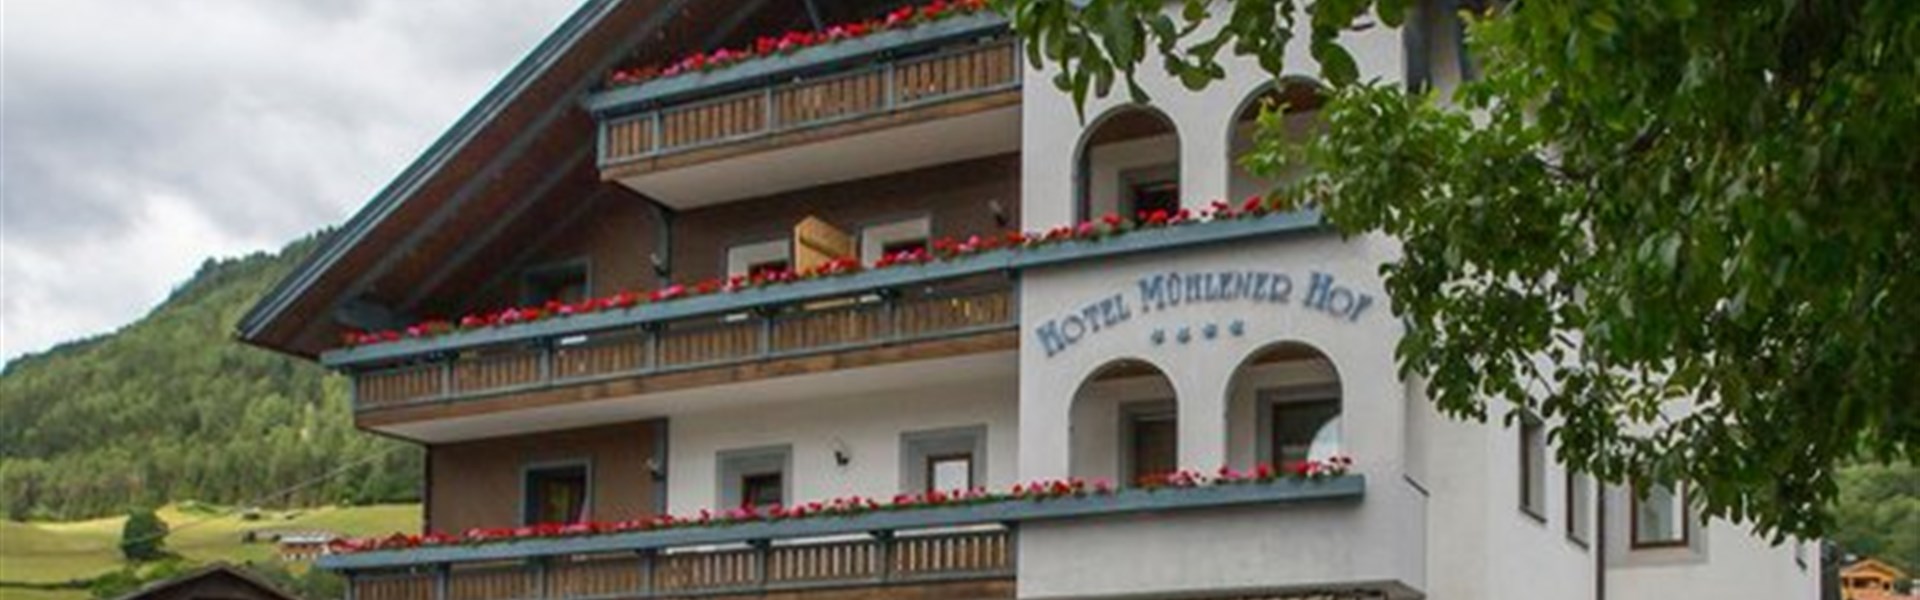 Marco Polo - Hotel Mühlenerhof (Léto/Sommer) - 